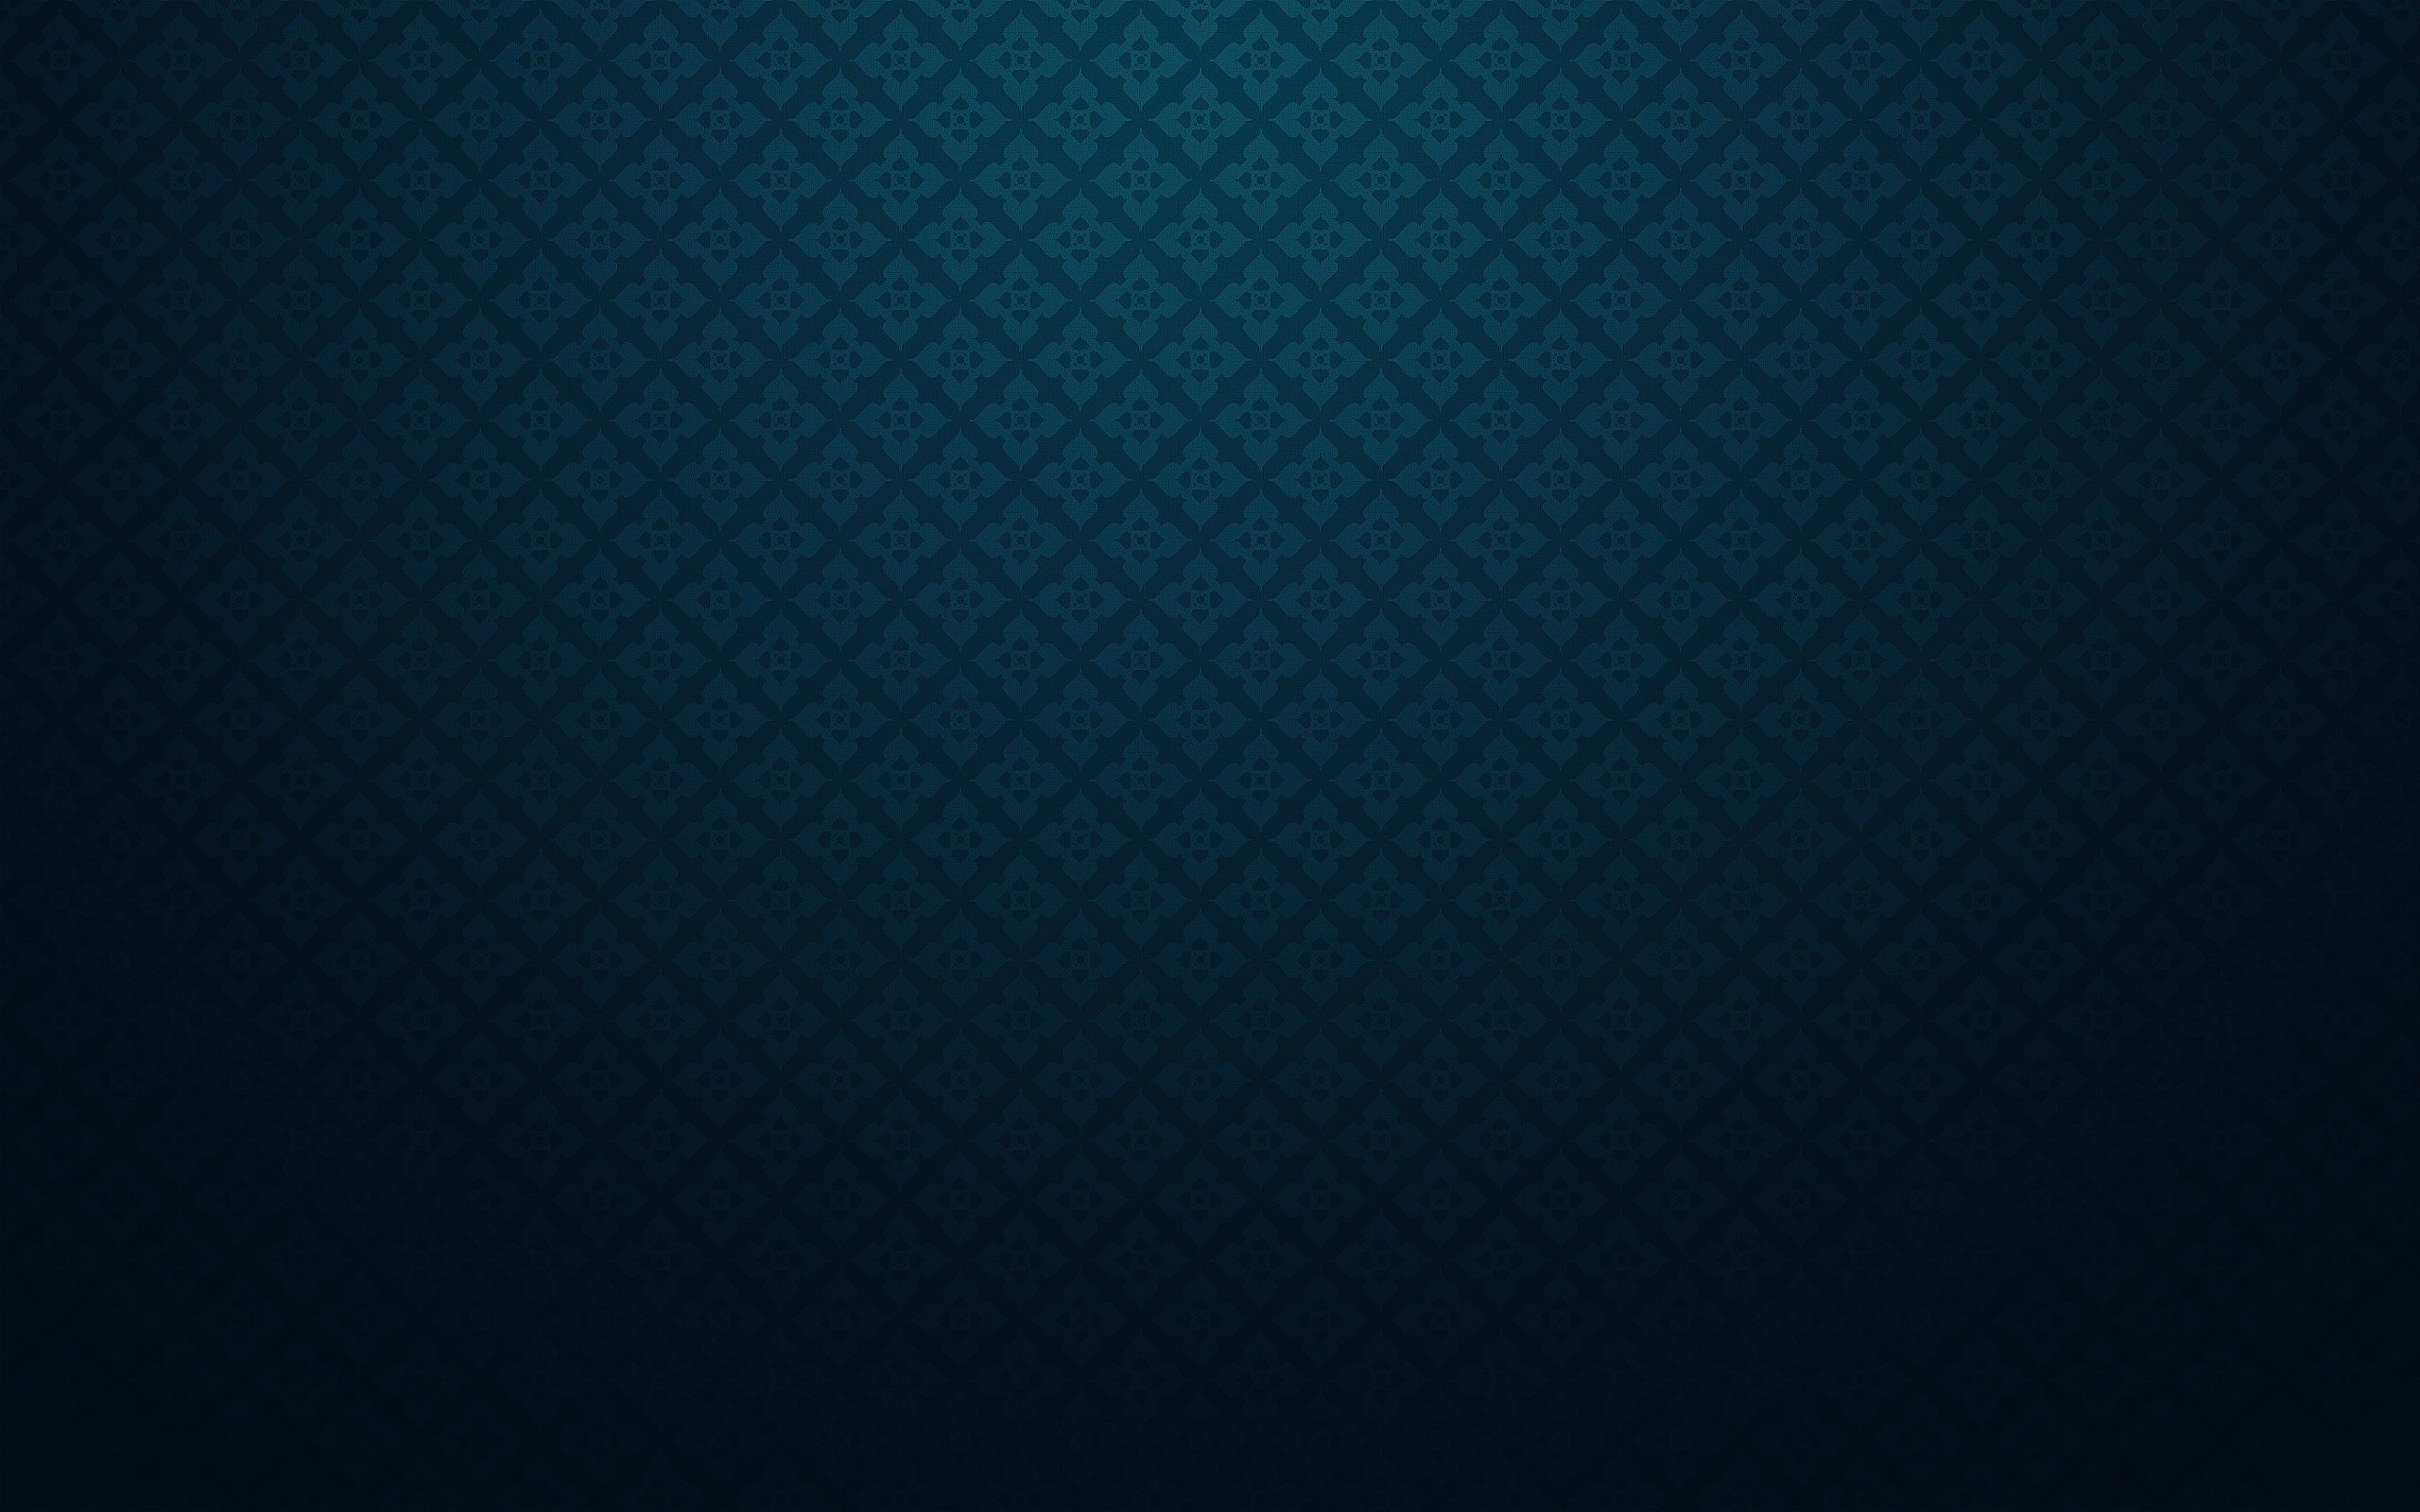 Squares Patterns of Dark Blue Background | Photo and Desktop Wallpaper